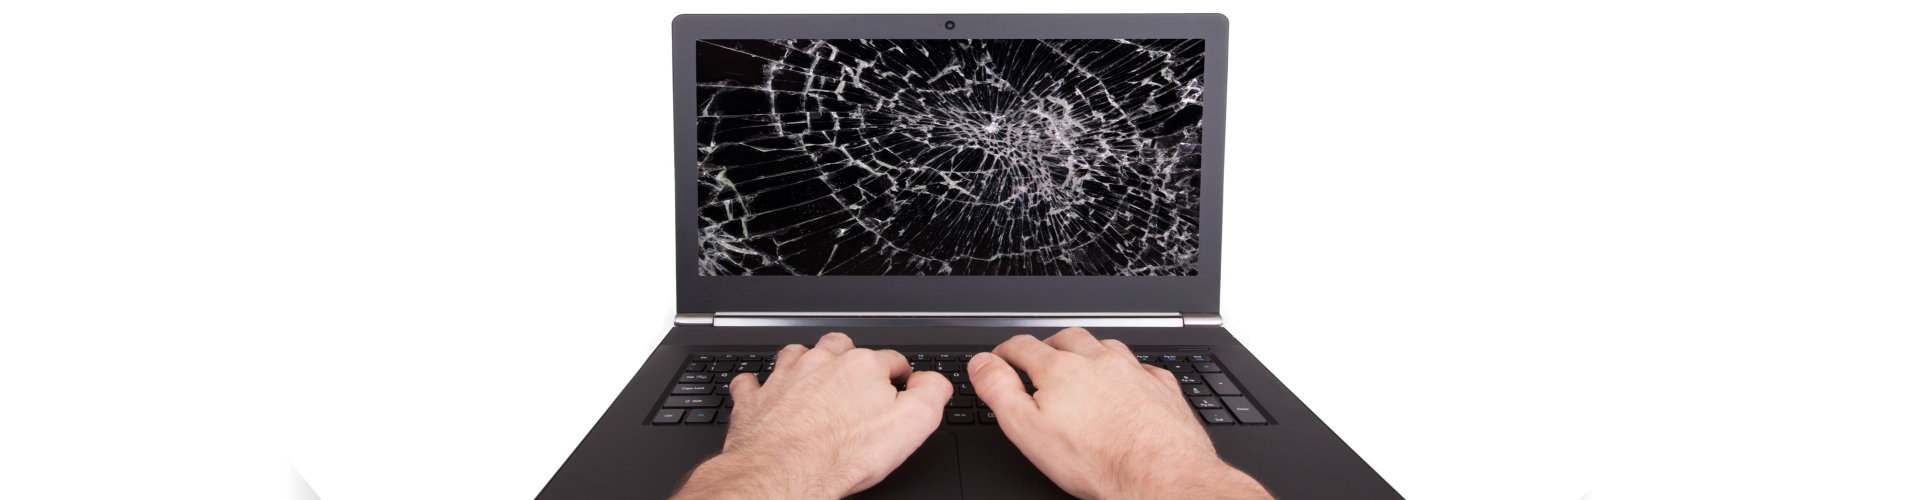 man using laptop with broken screen